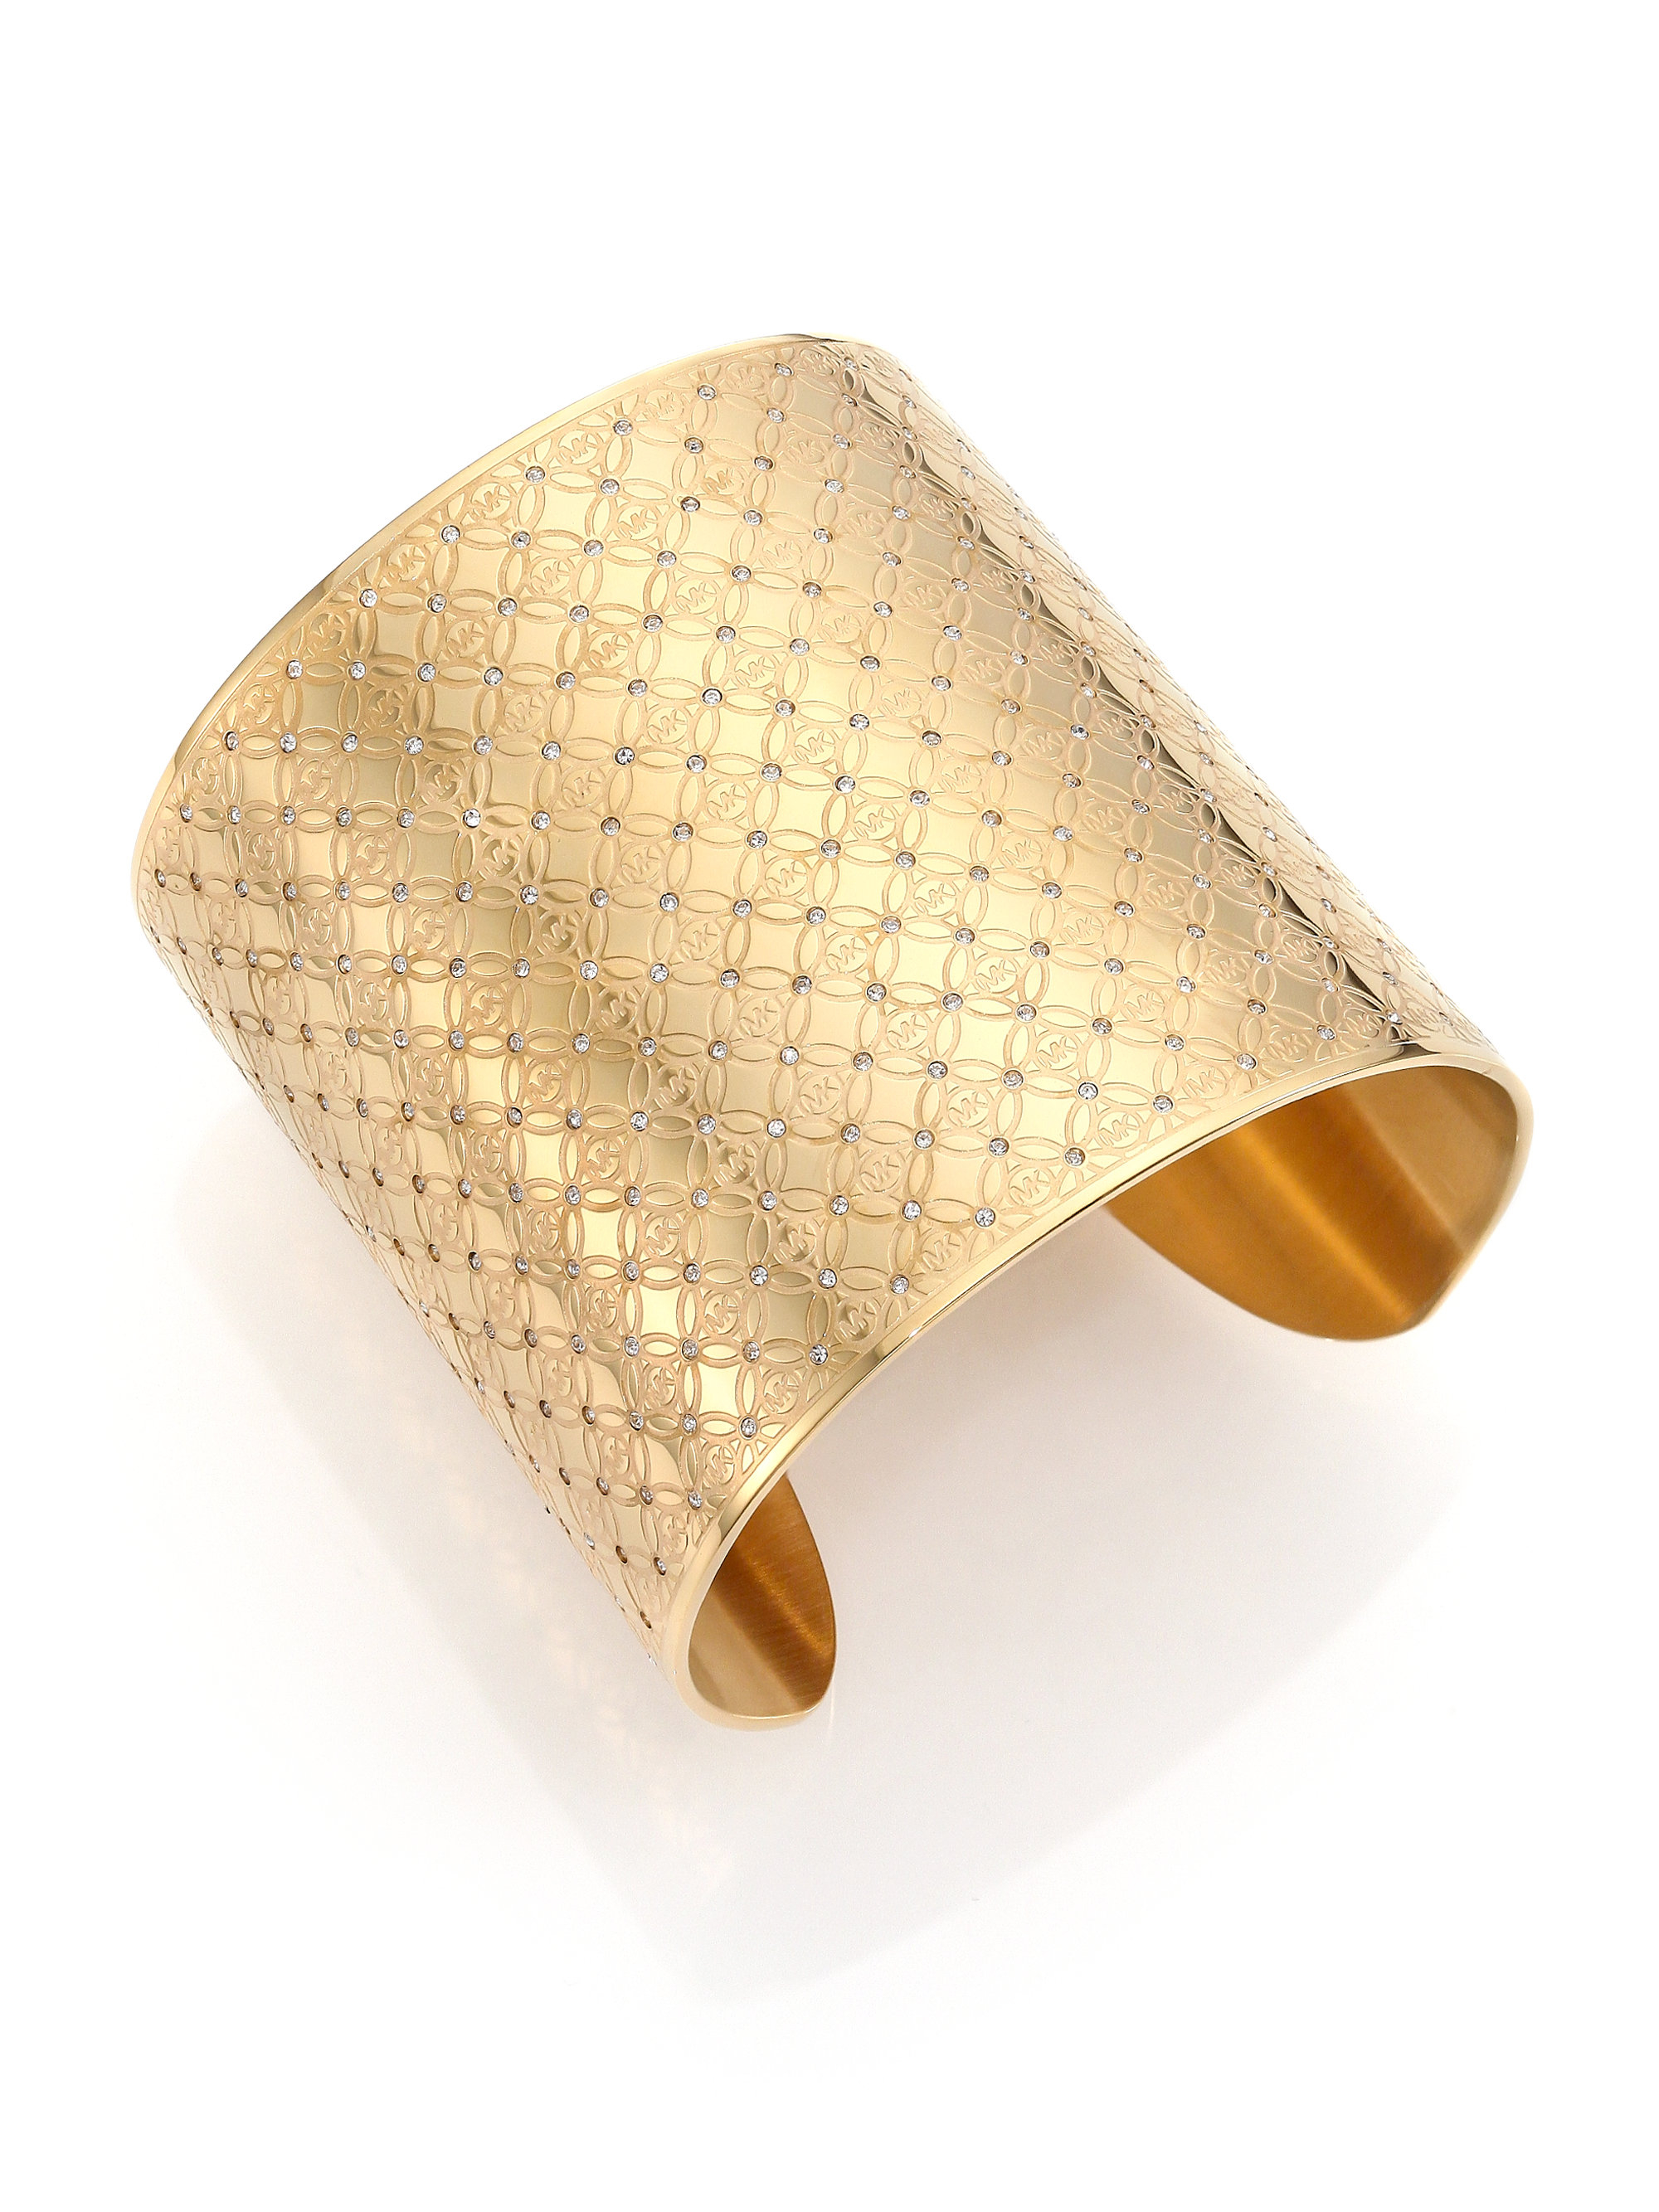 michael kors gold cuff bracelet